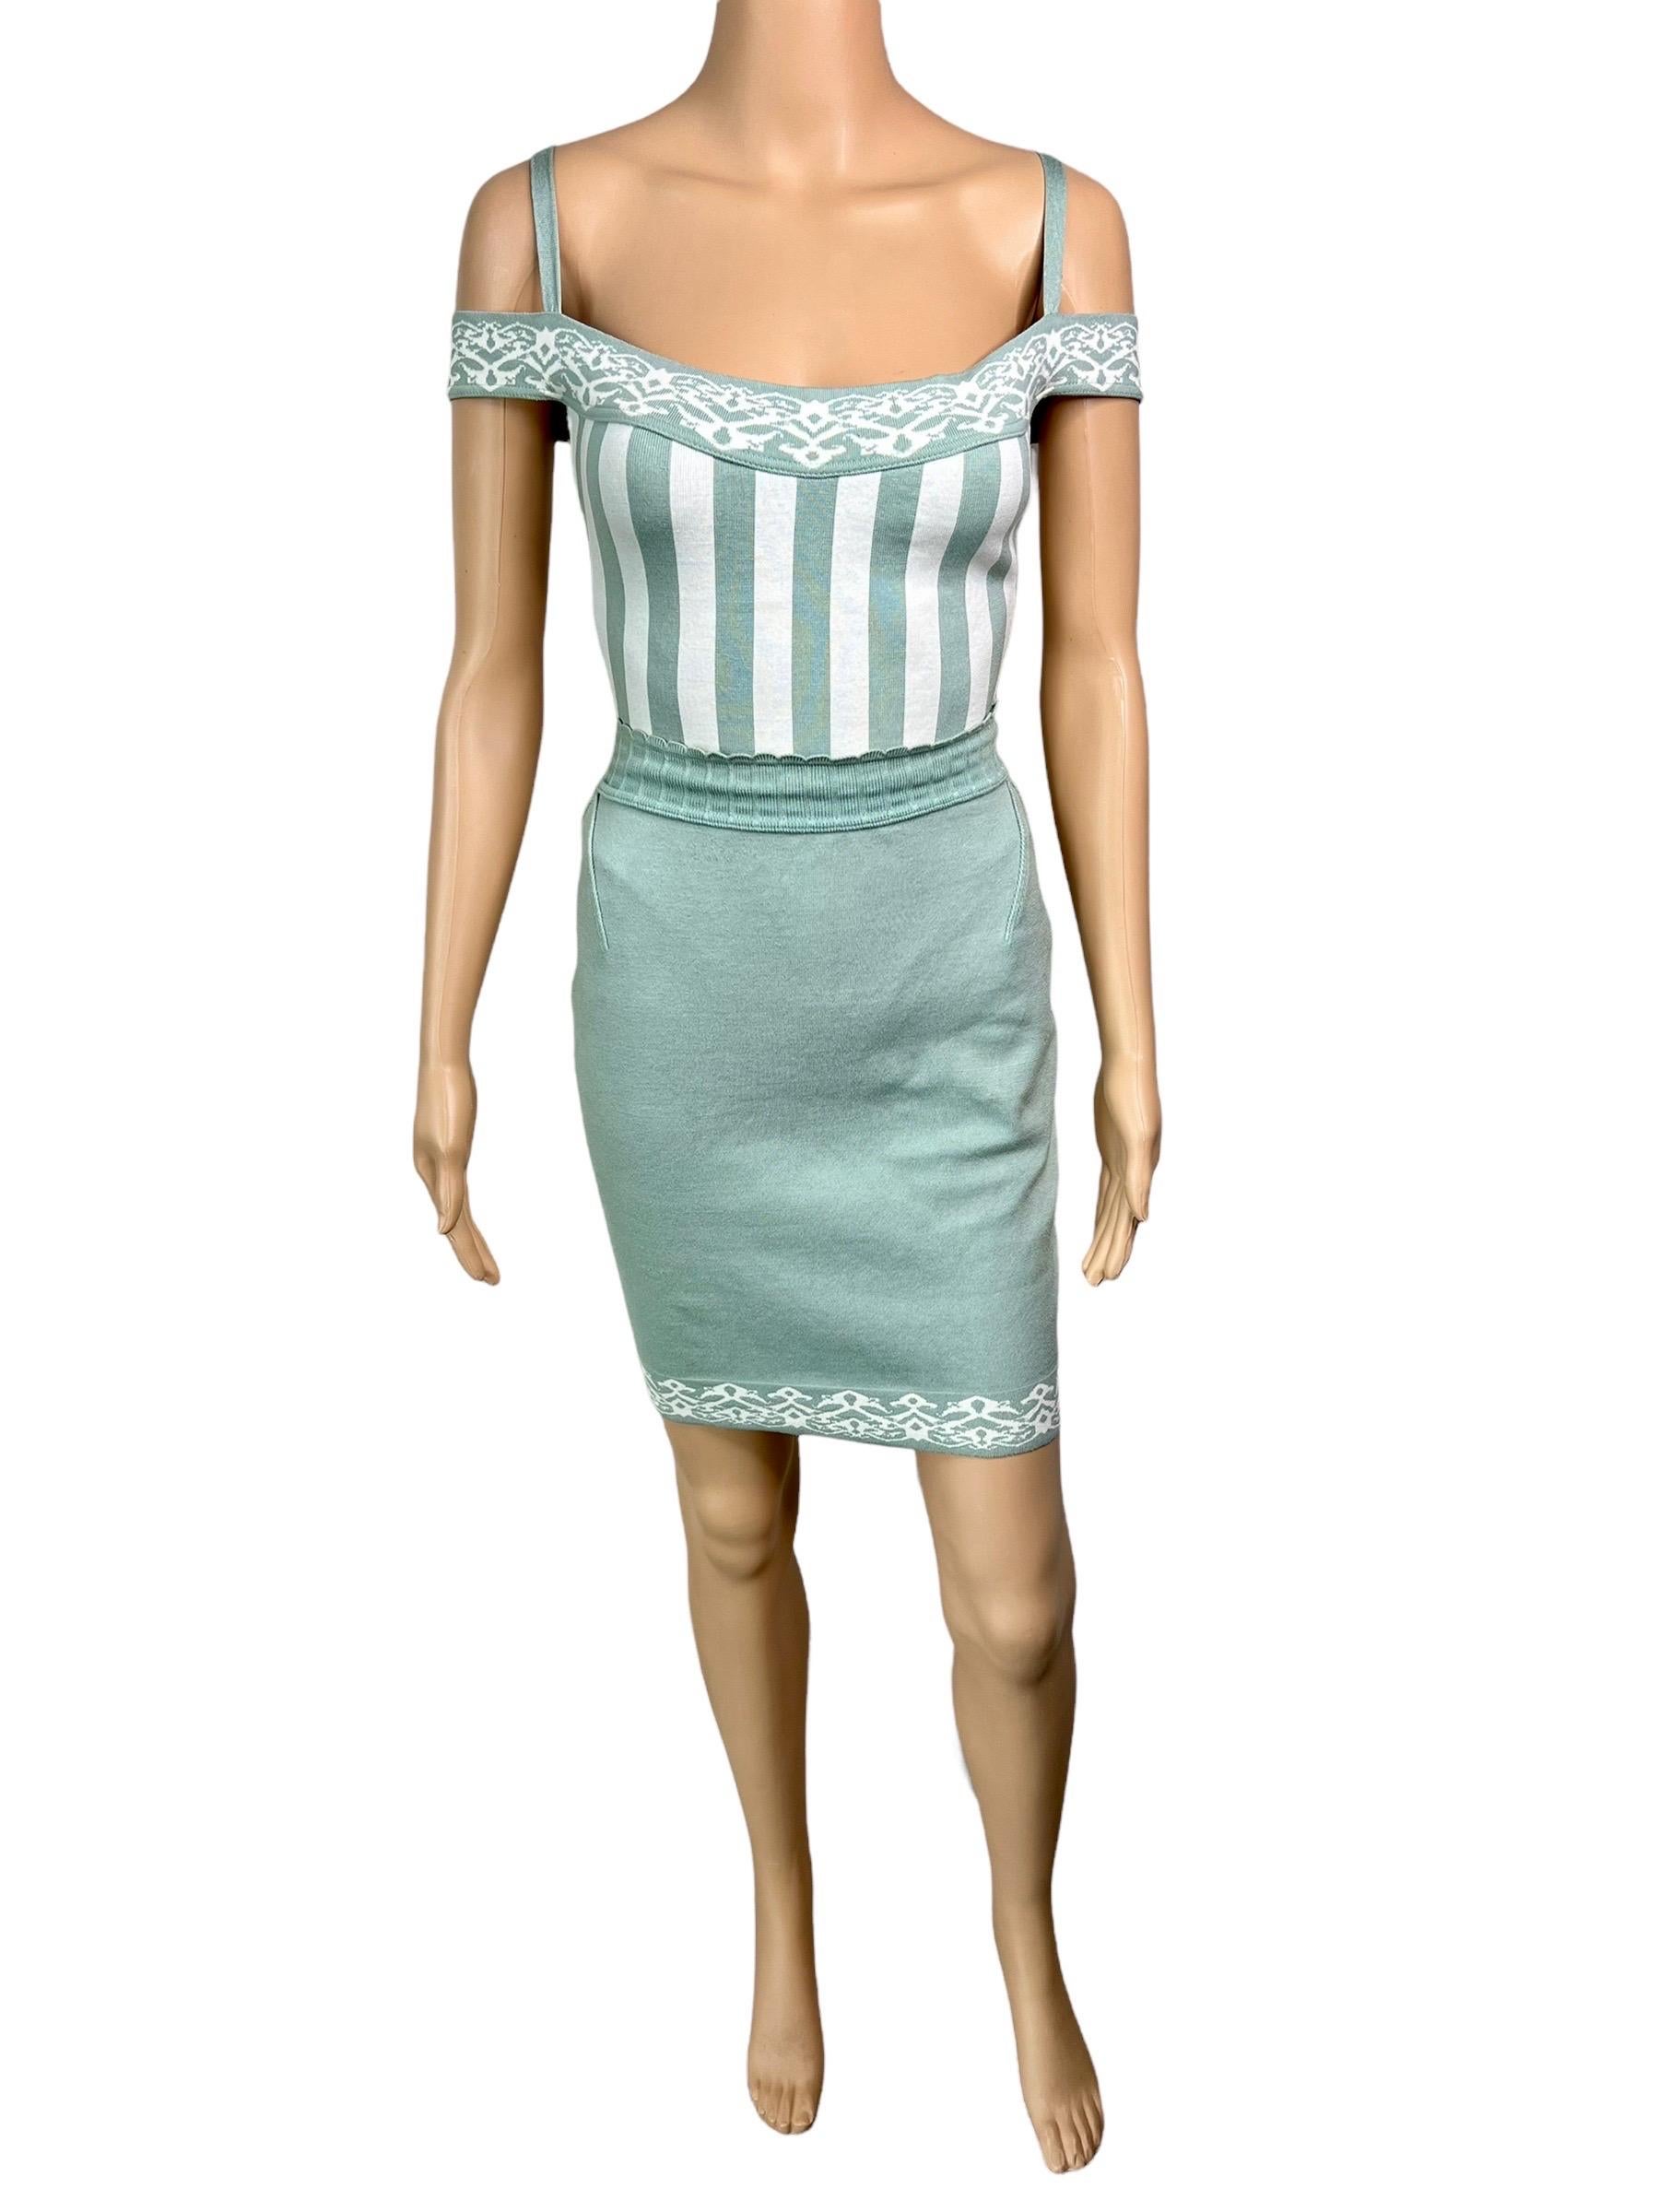 Women's or Men's Azzedine Alaia S/S 1992 Vintage Striped Bodysuit Top and Mini Skirt 2 Piece Set For Sale